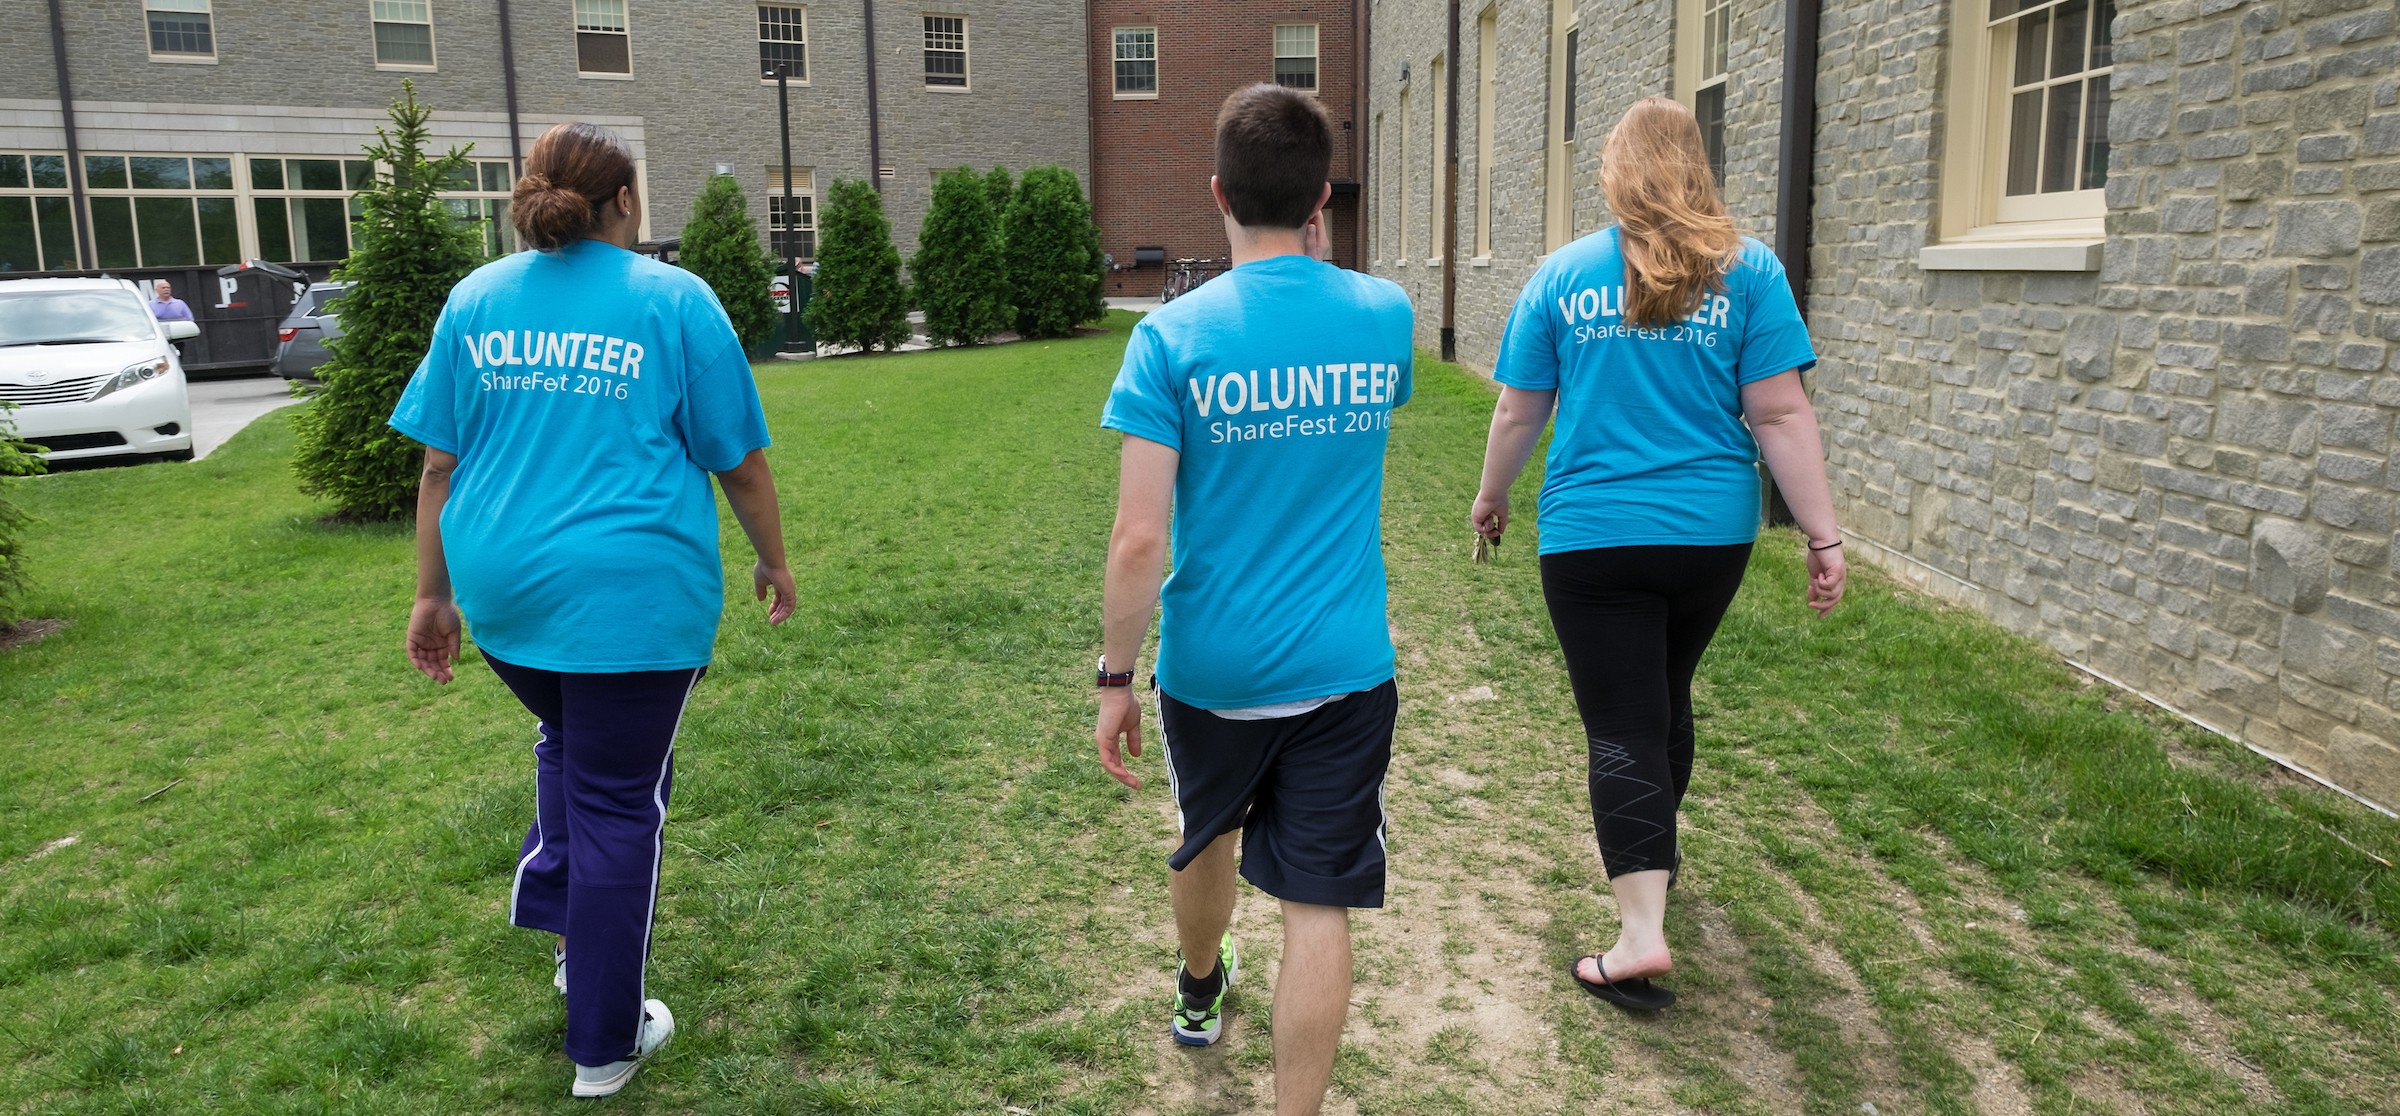 Students walking wearing volunteer tshirts